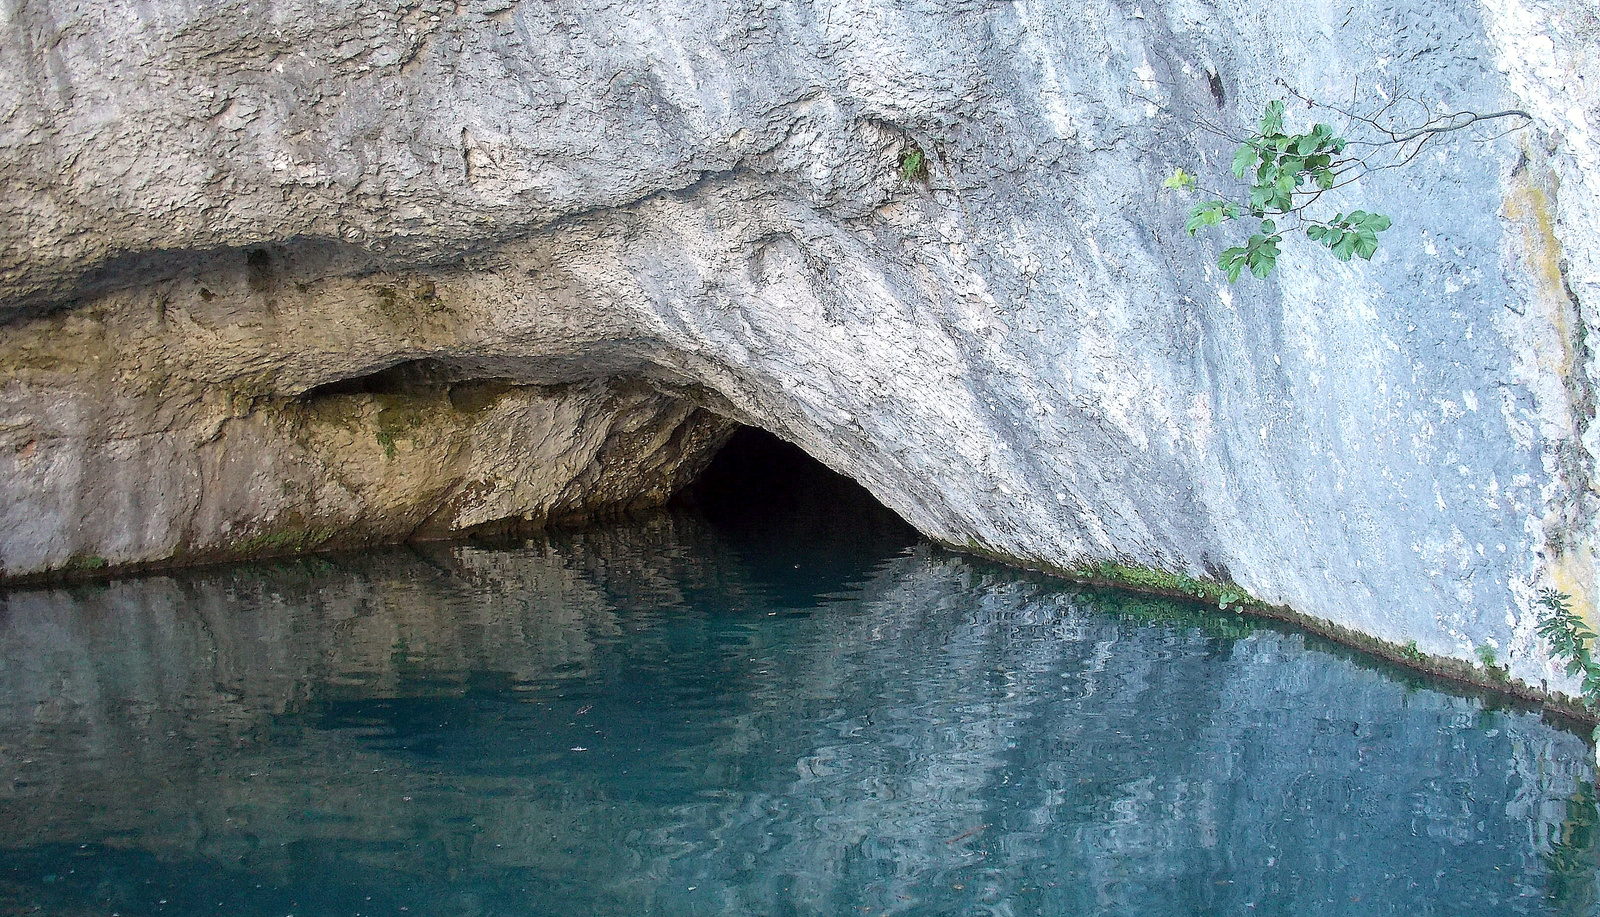 A Nagy-barlang